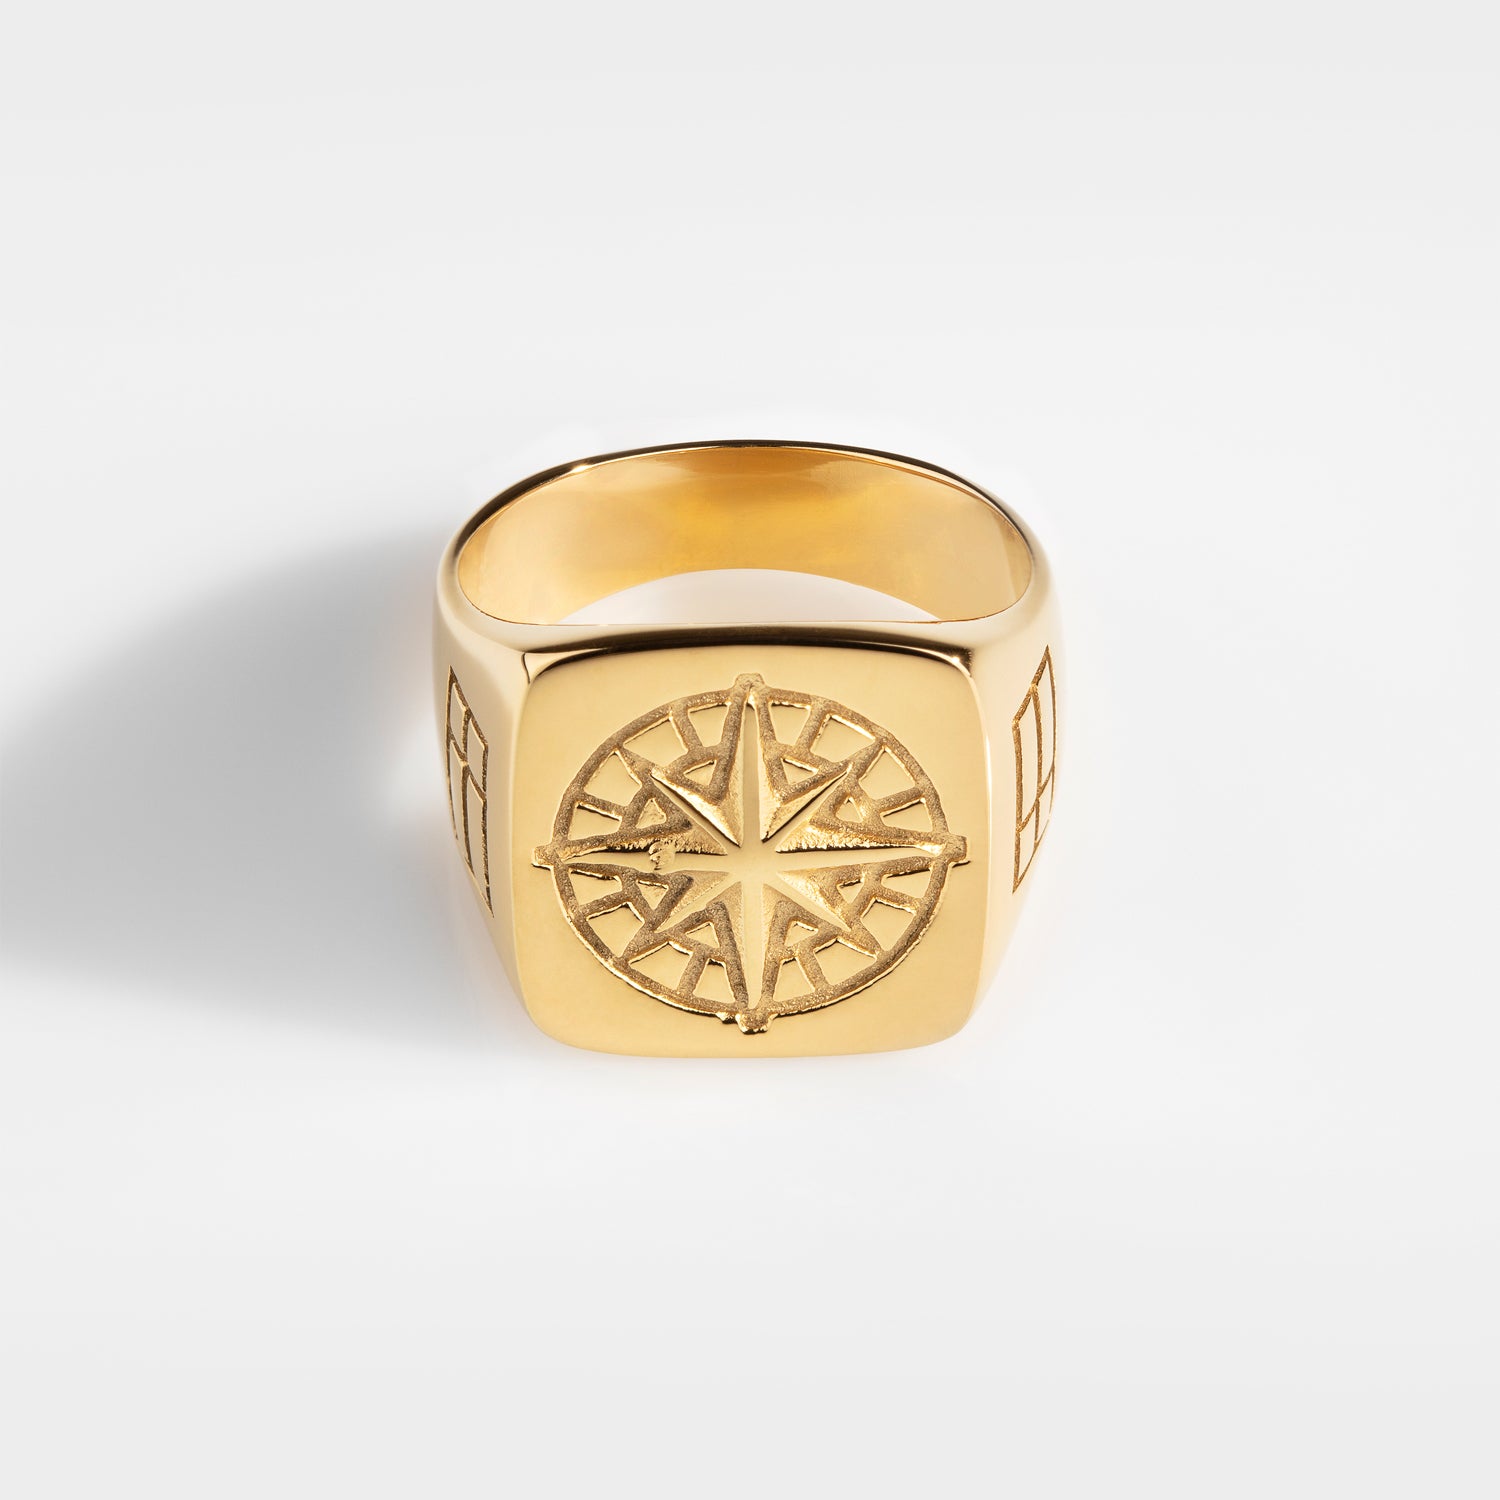 Compass Signature - Gold tone ring